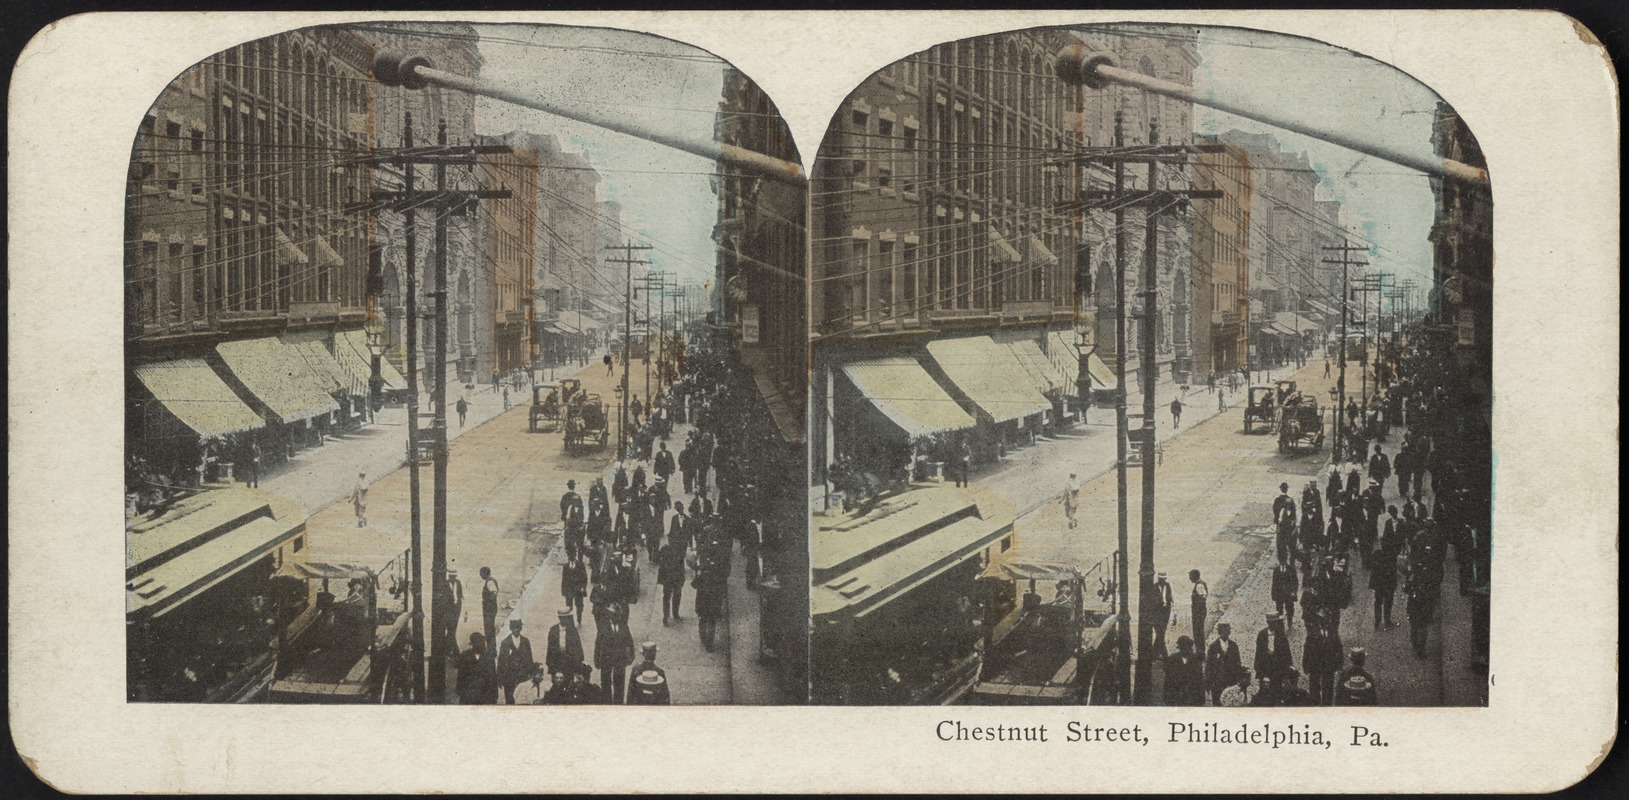 Chestnut Street, Philadelphia, Pa.